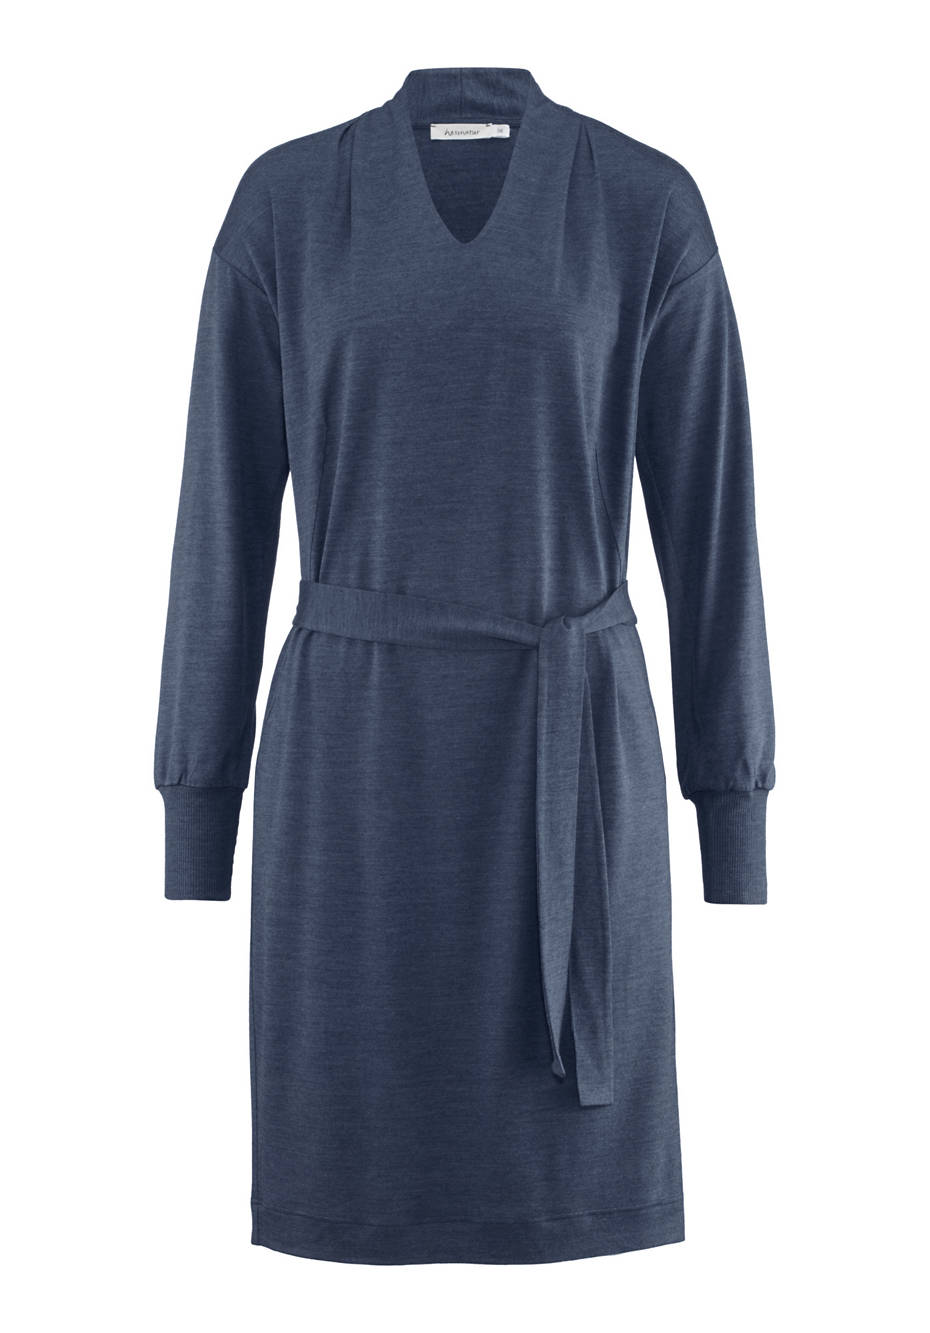 Wool jersey dress made from organic merino wool with silk